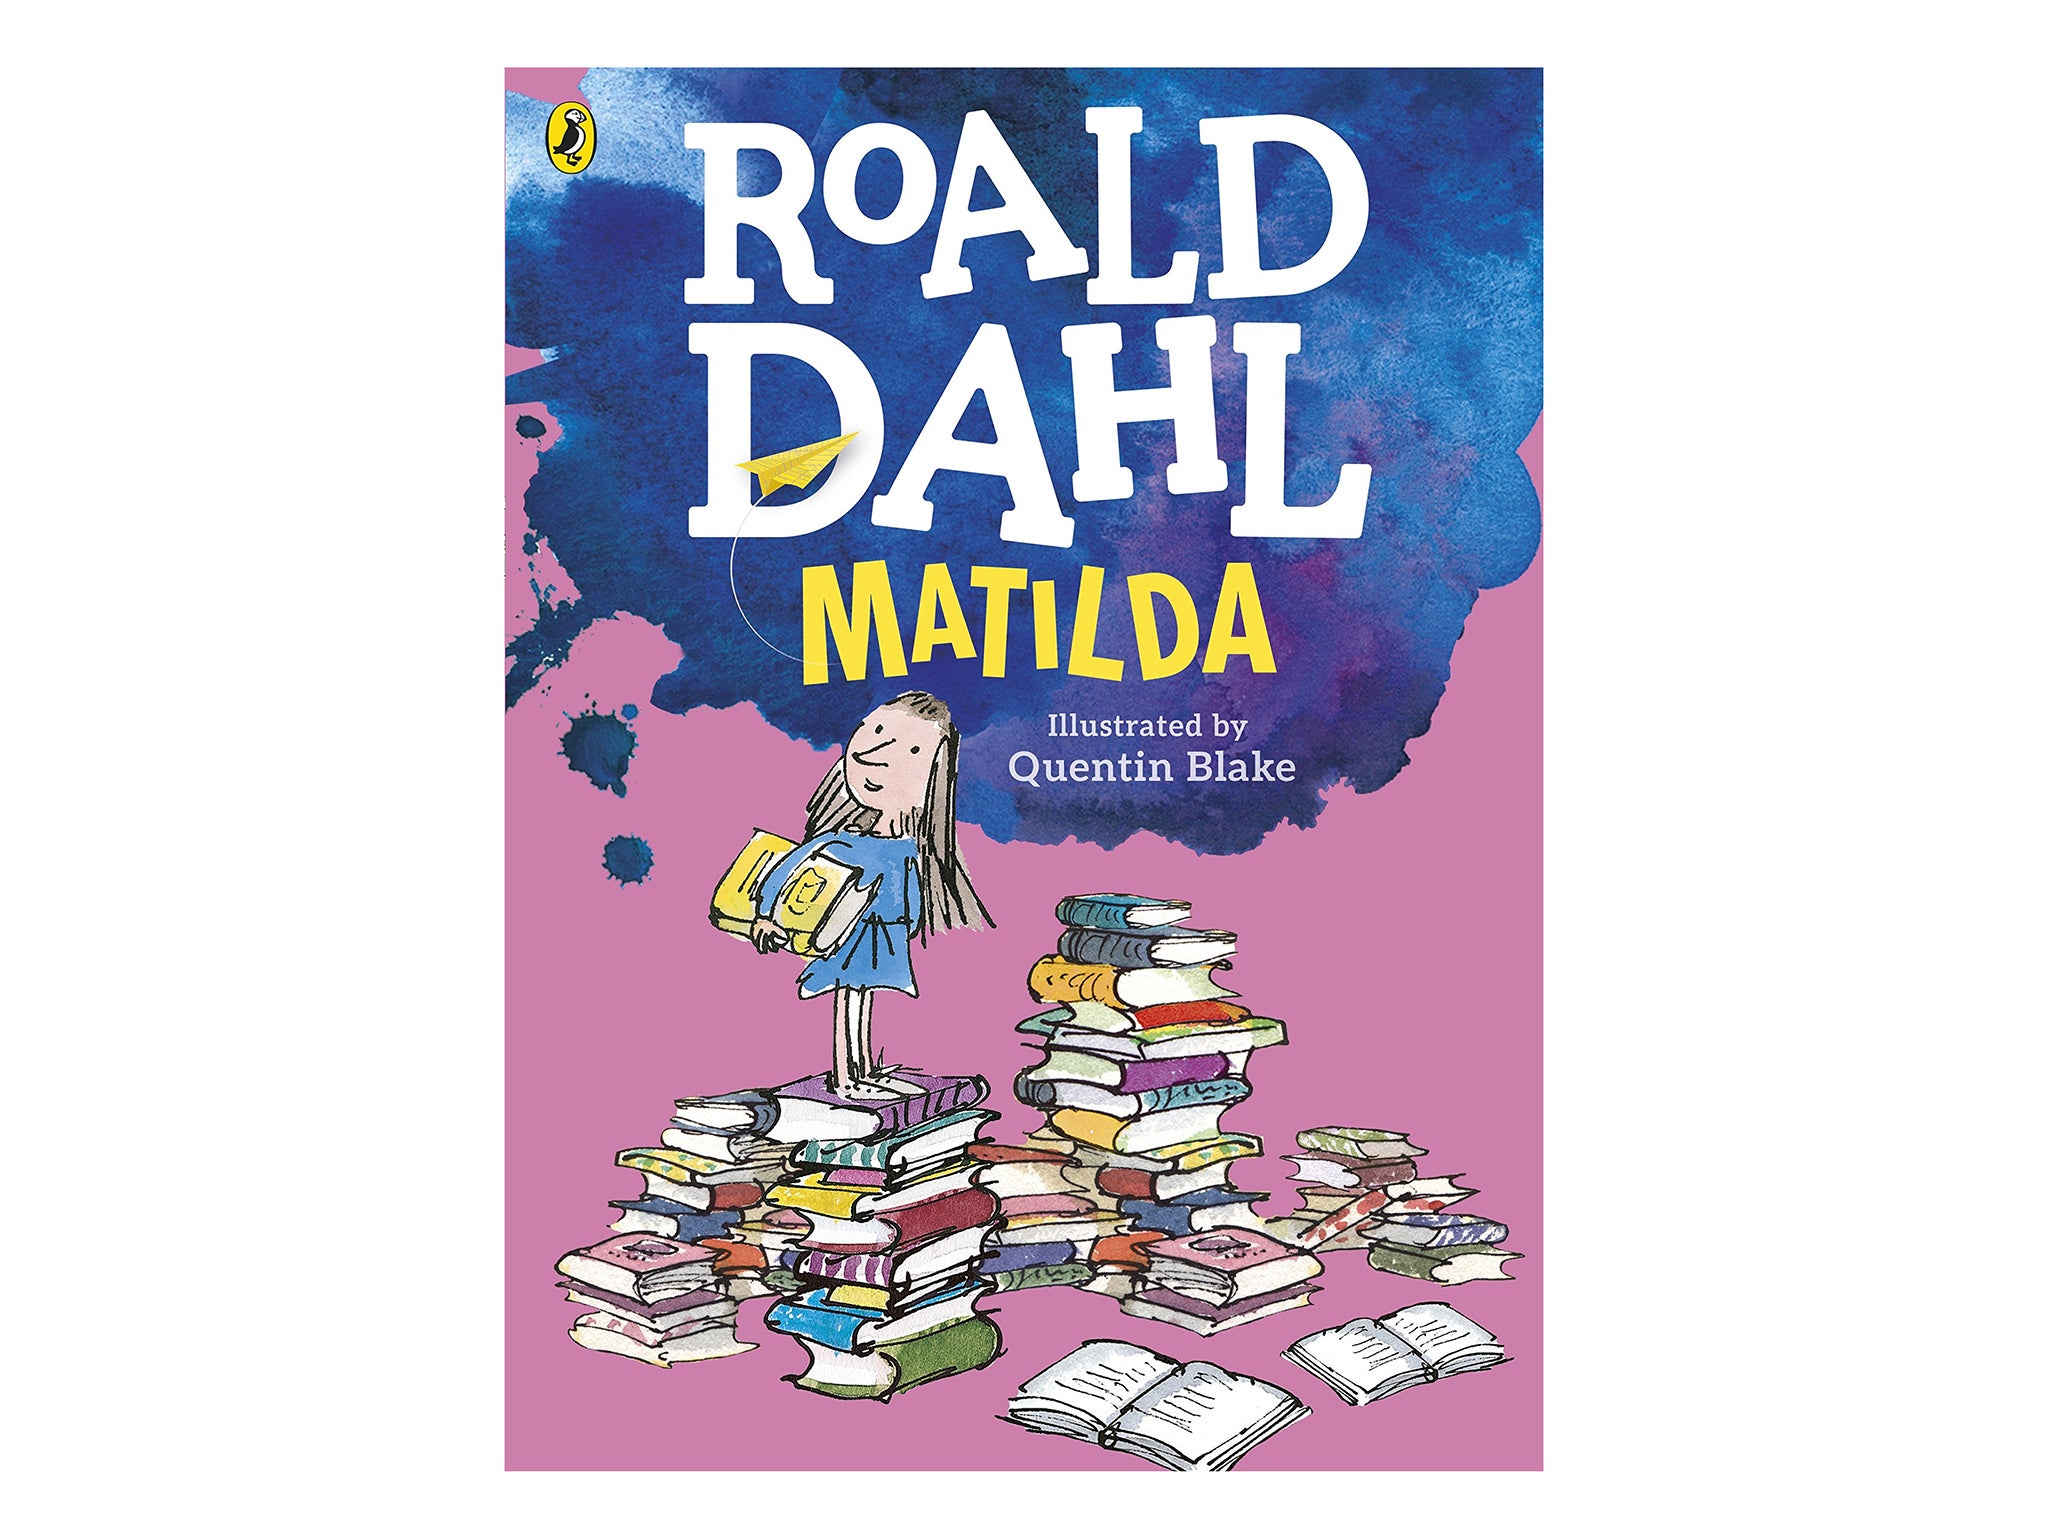 ‘Matilda’ by Roald Dahl day indybest.jpg